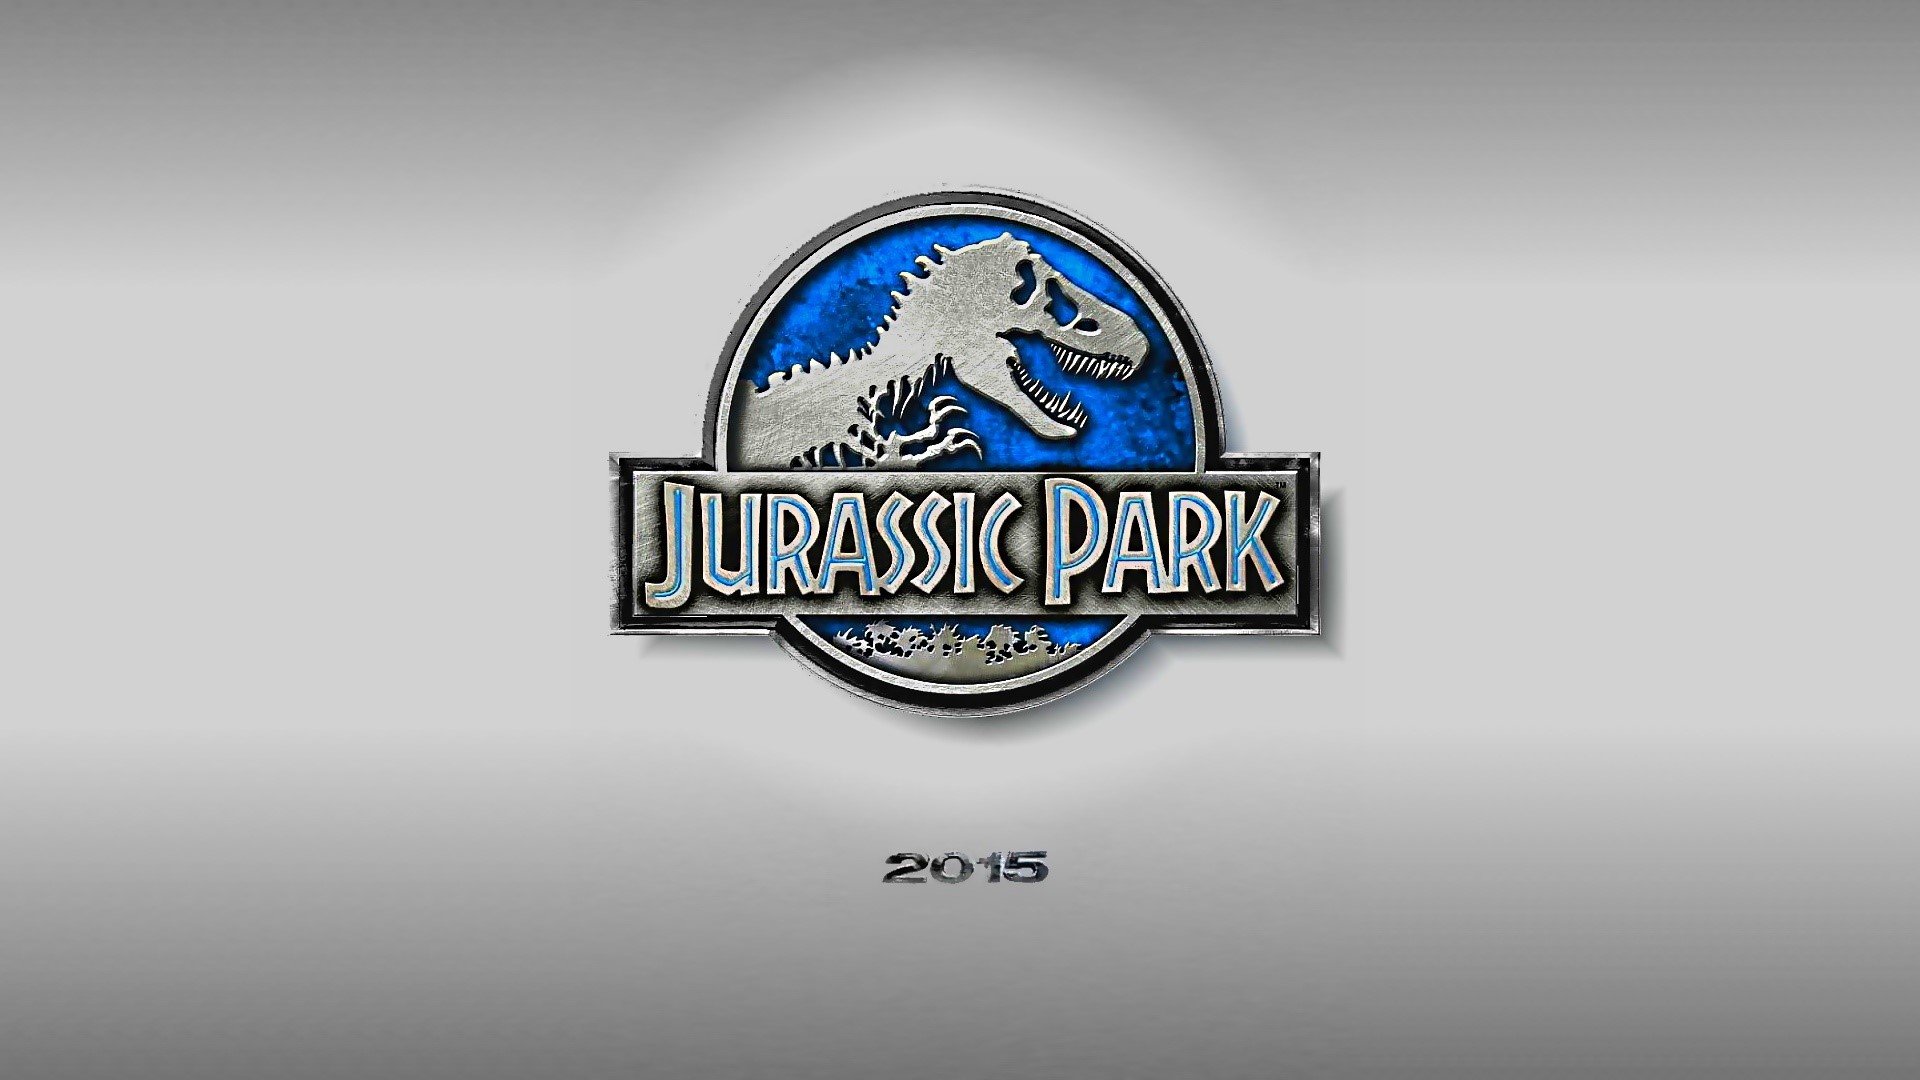 Fondos de pantalla Jurassic park 4